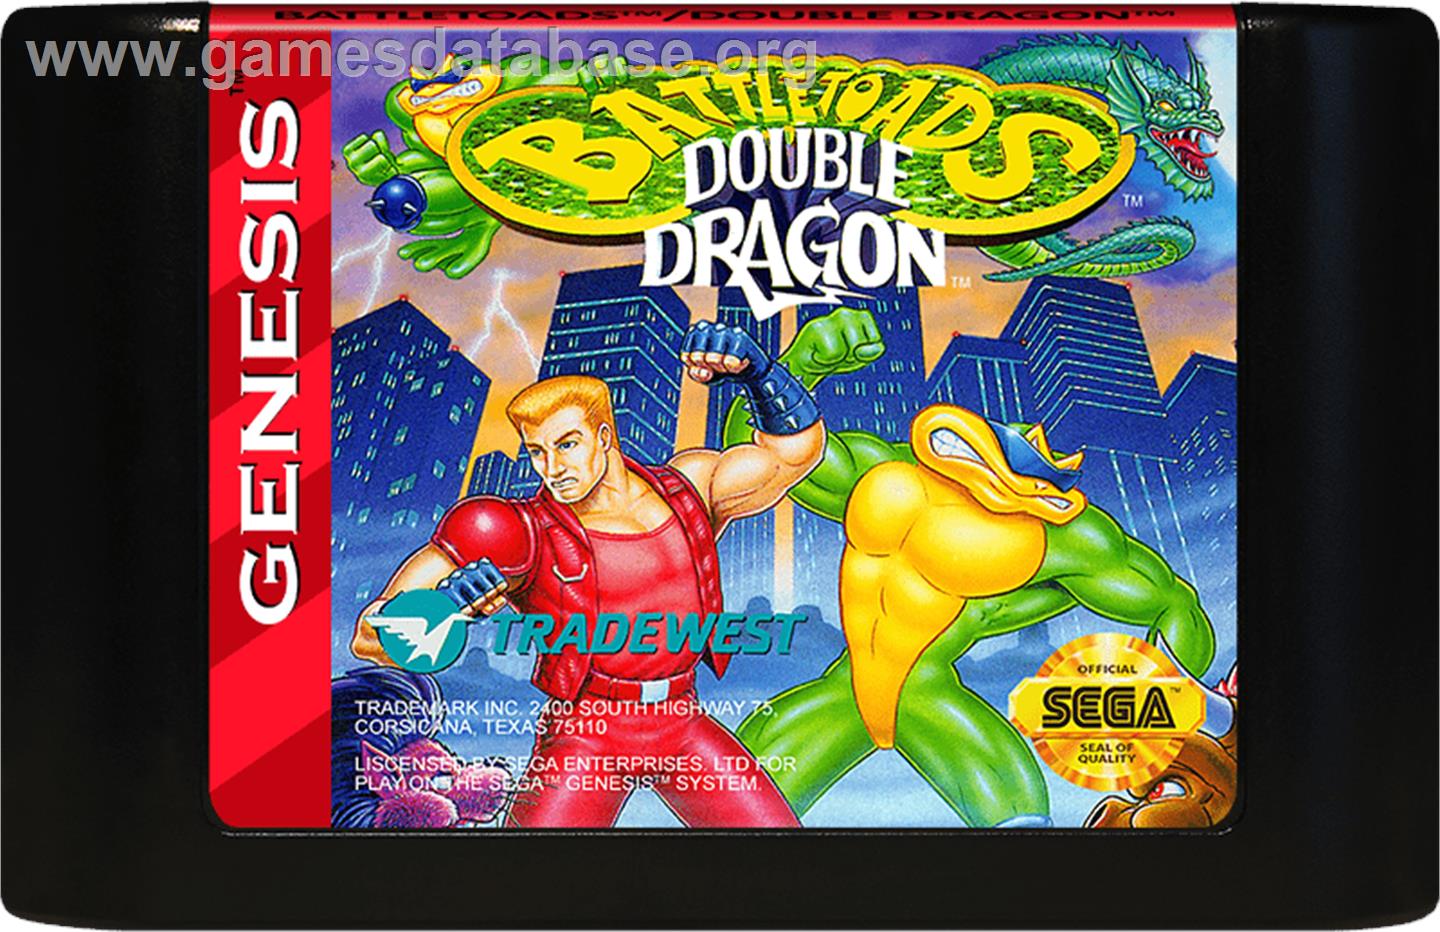 Battletoads & Double Dragon: The Ultimate Team - Sega Genesis - Artwork - Cartridge